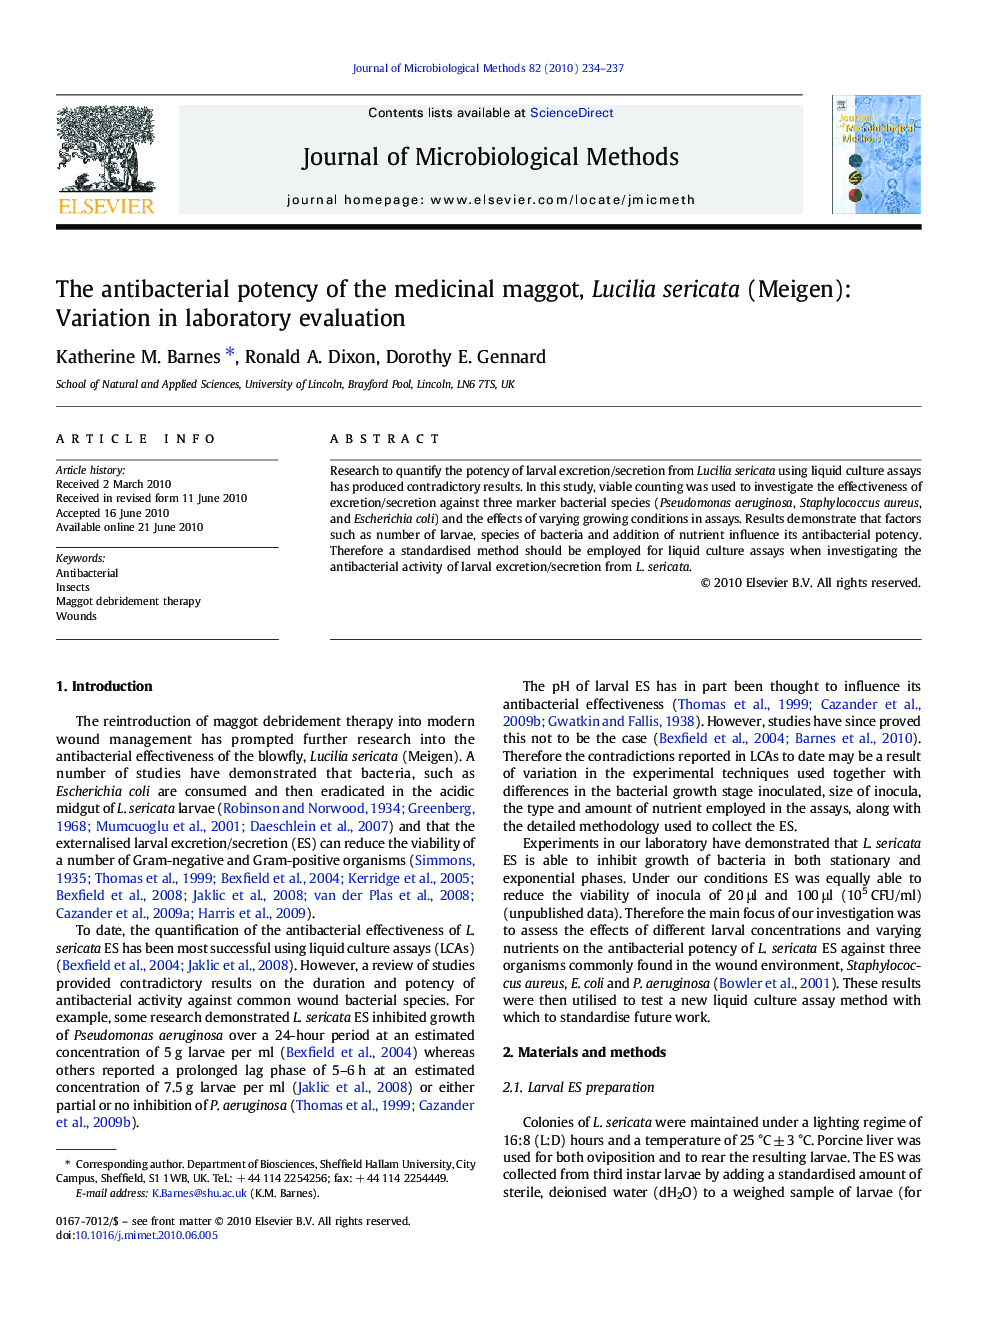 The antibacterial potency of the medicinal maggot, Lucilia sericata (Meigen): Variation in laboratory evaluation